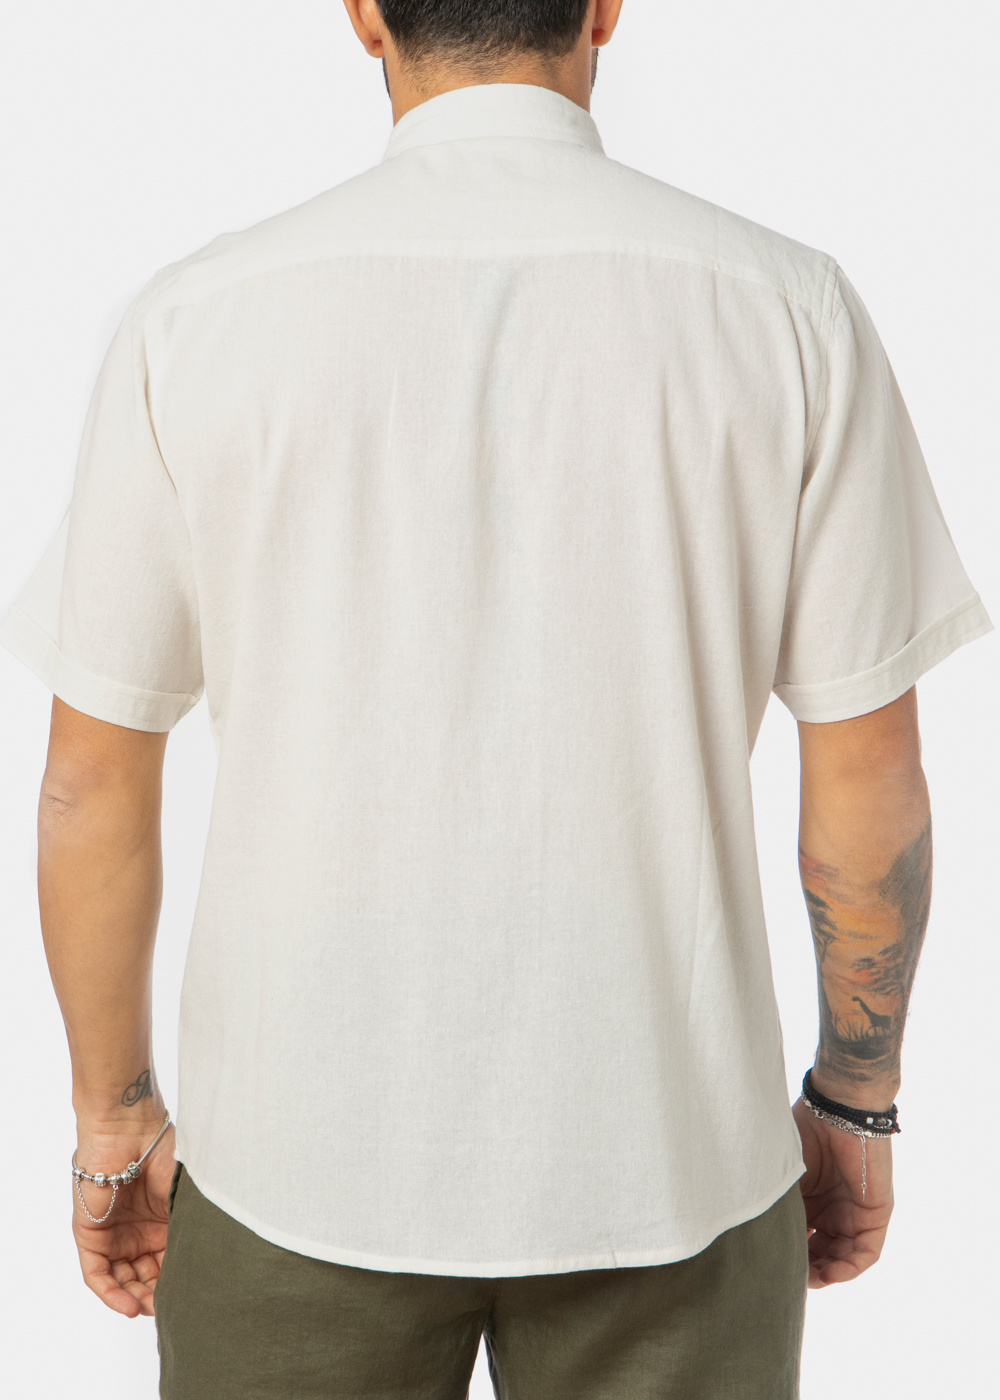 White Classic Shirt w/ Short Sleeves